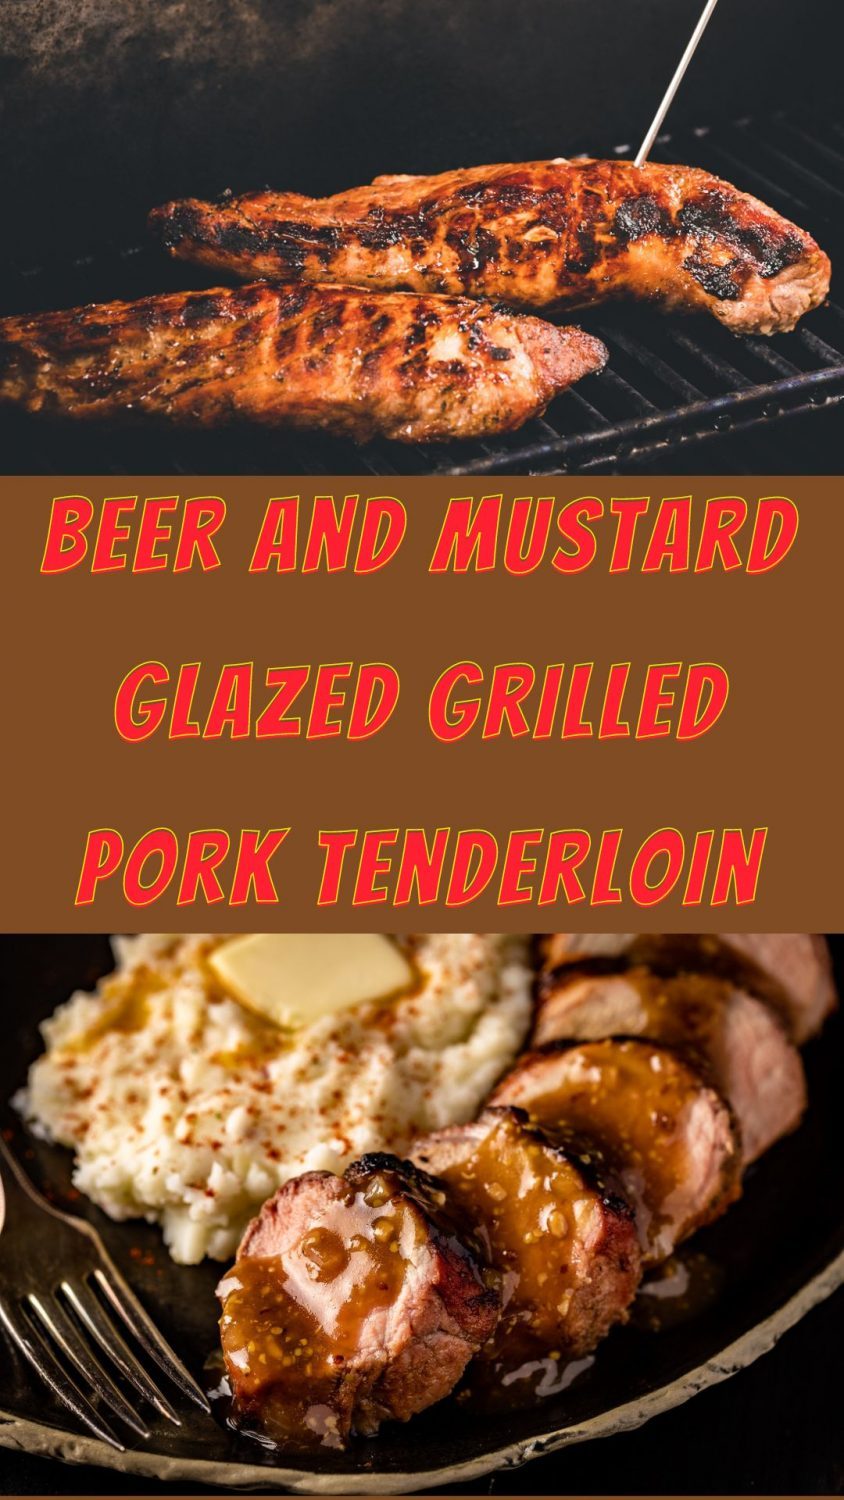 Beer and Mustard Glazed Grilled Pork Tenderloin